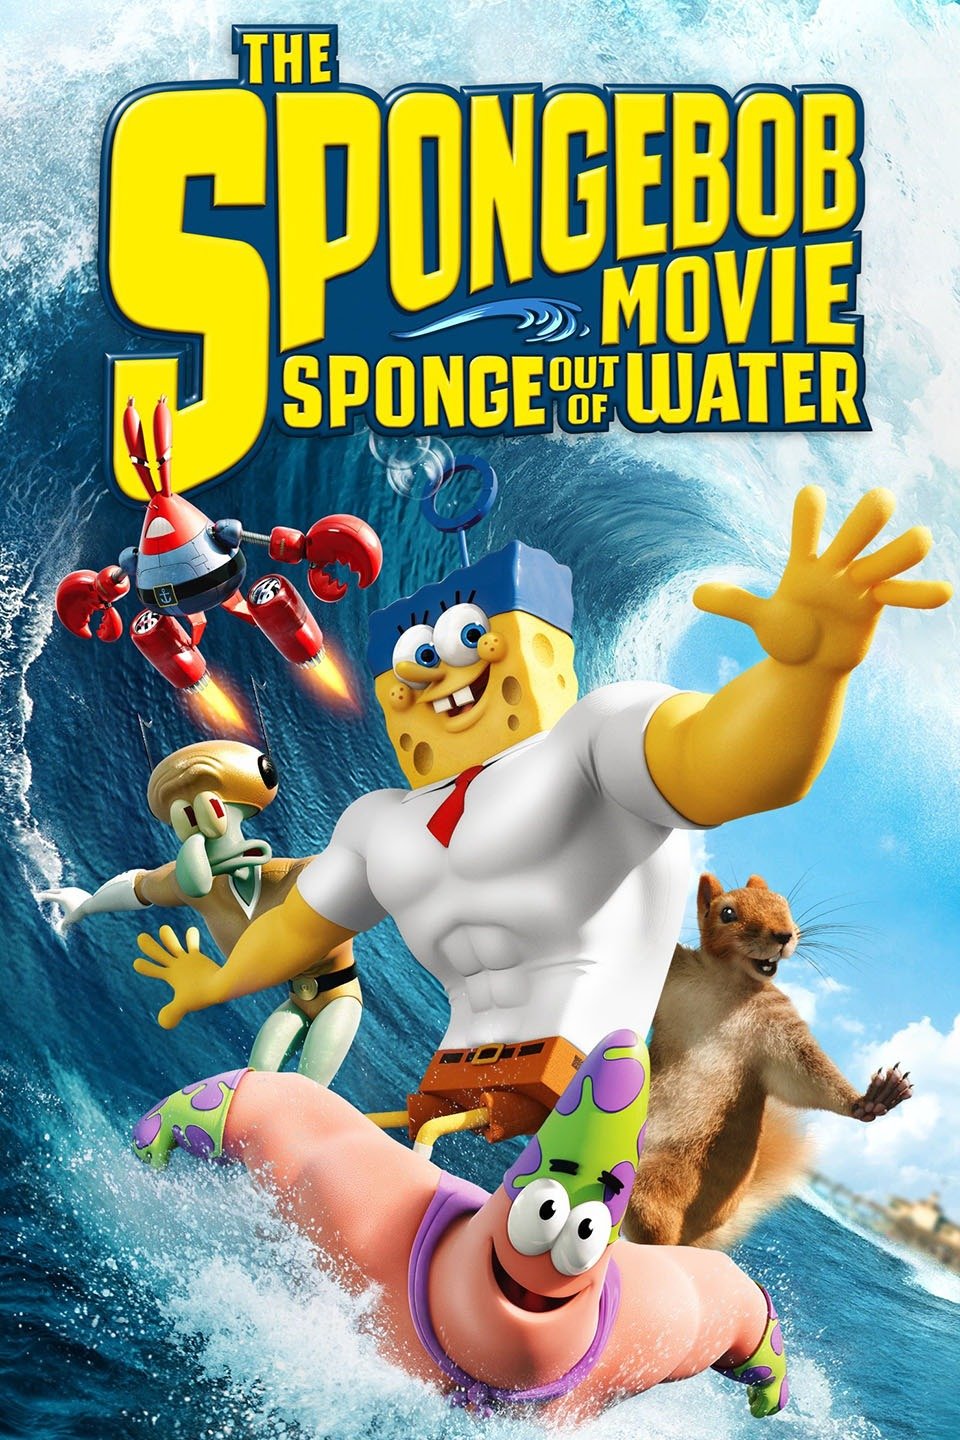 [MINI Super-HQ] The SpongeBob Movie: Sponge Out of Water (2015) สพันจ์บ็อบ ฮีโร่จากใต้สมุทร [1080p] [พากย์ไทย 5.1 + อังกฤษ 5.1] [บรรยายไทย + อังกฤษ] [เสียงไทย + ซับไทย] [ONE2UP]